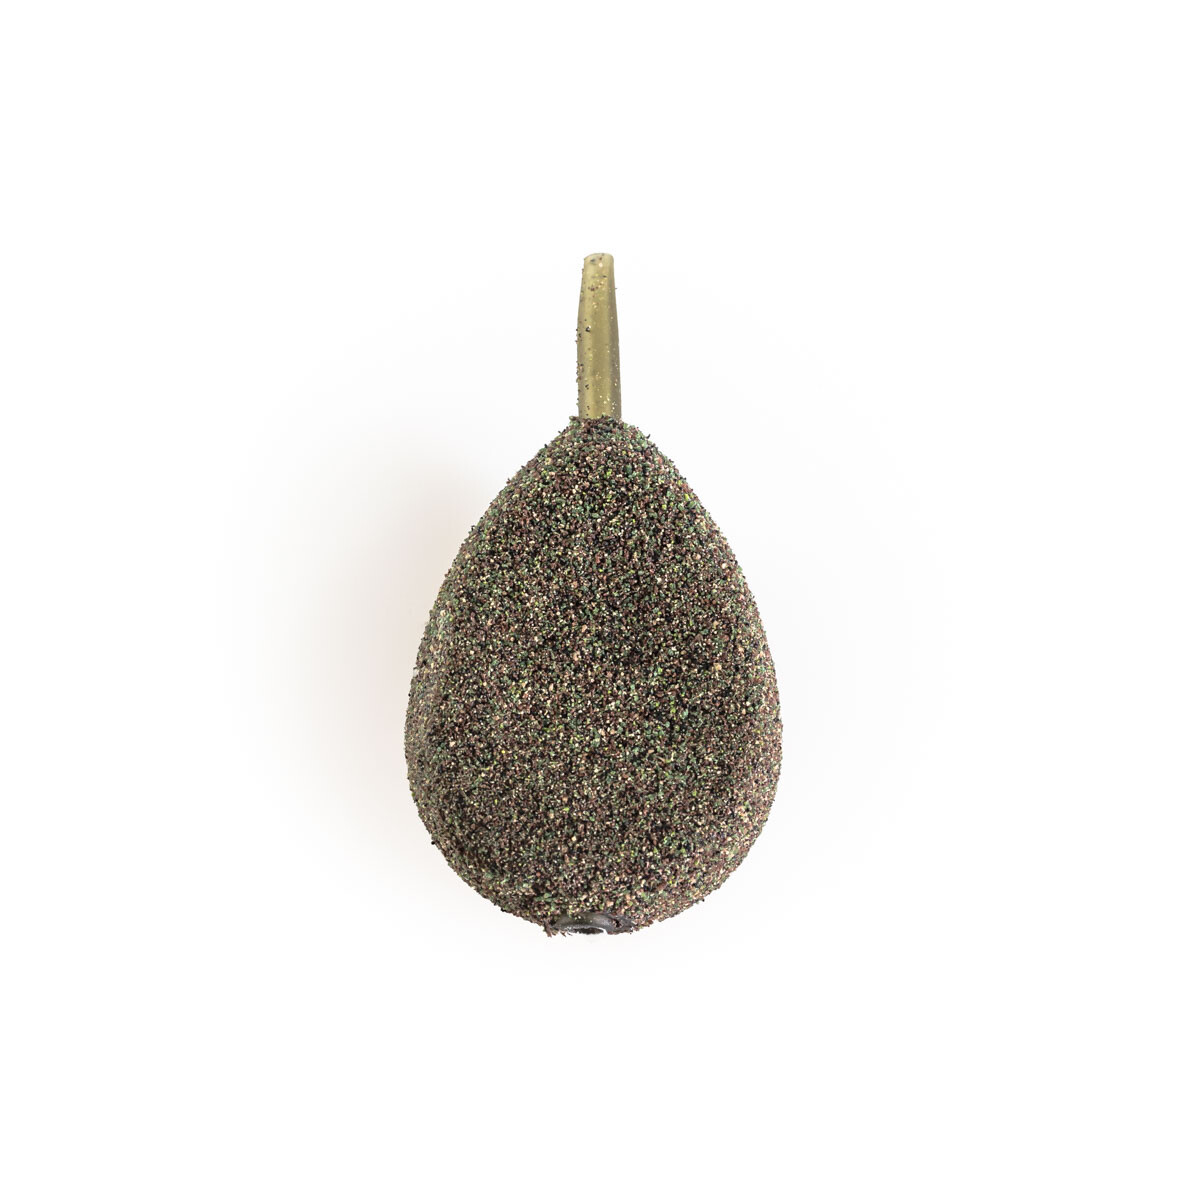 Flat Pear Inline - Weedy Green 100 Gramm